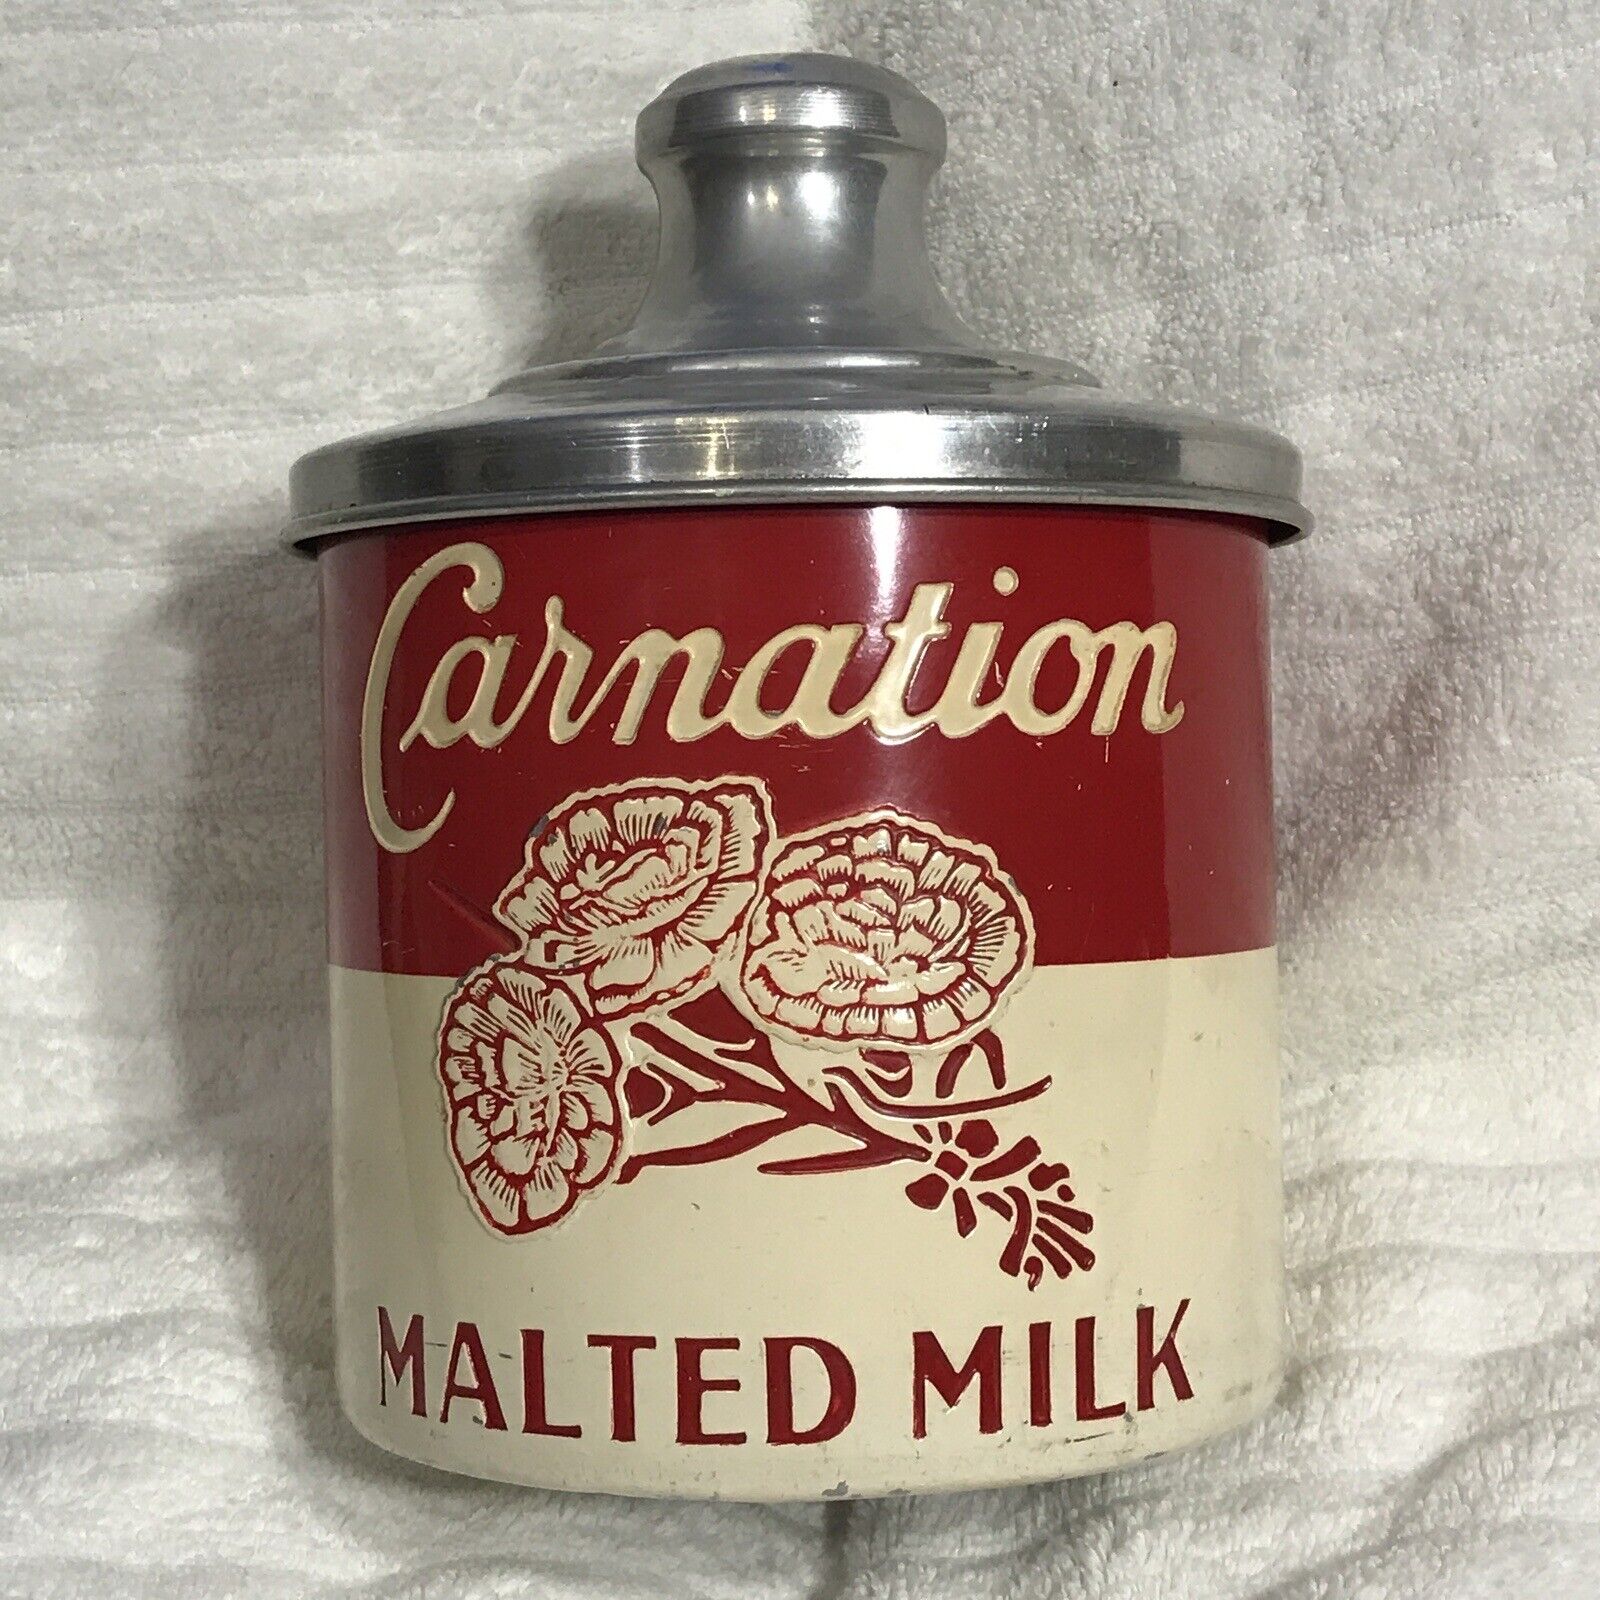 Vintage Carnation Malted Milk Cannister. Circa 1940